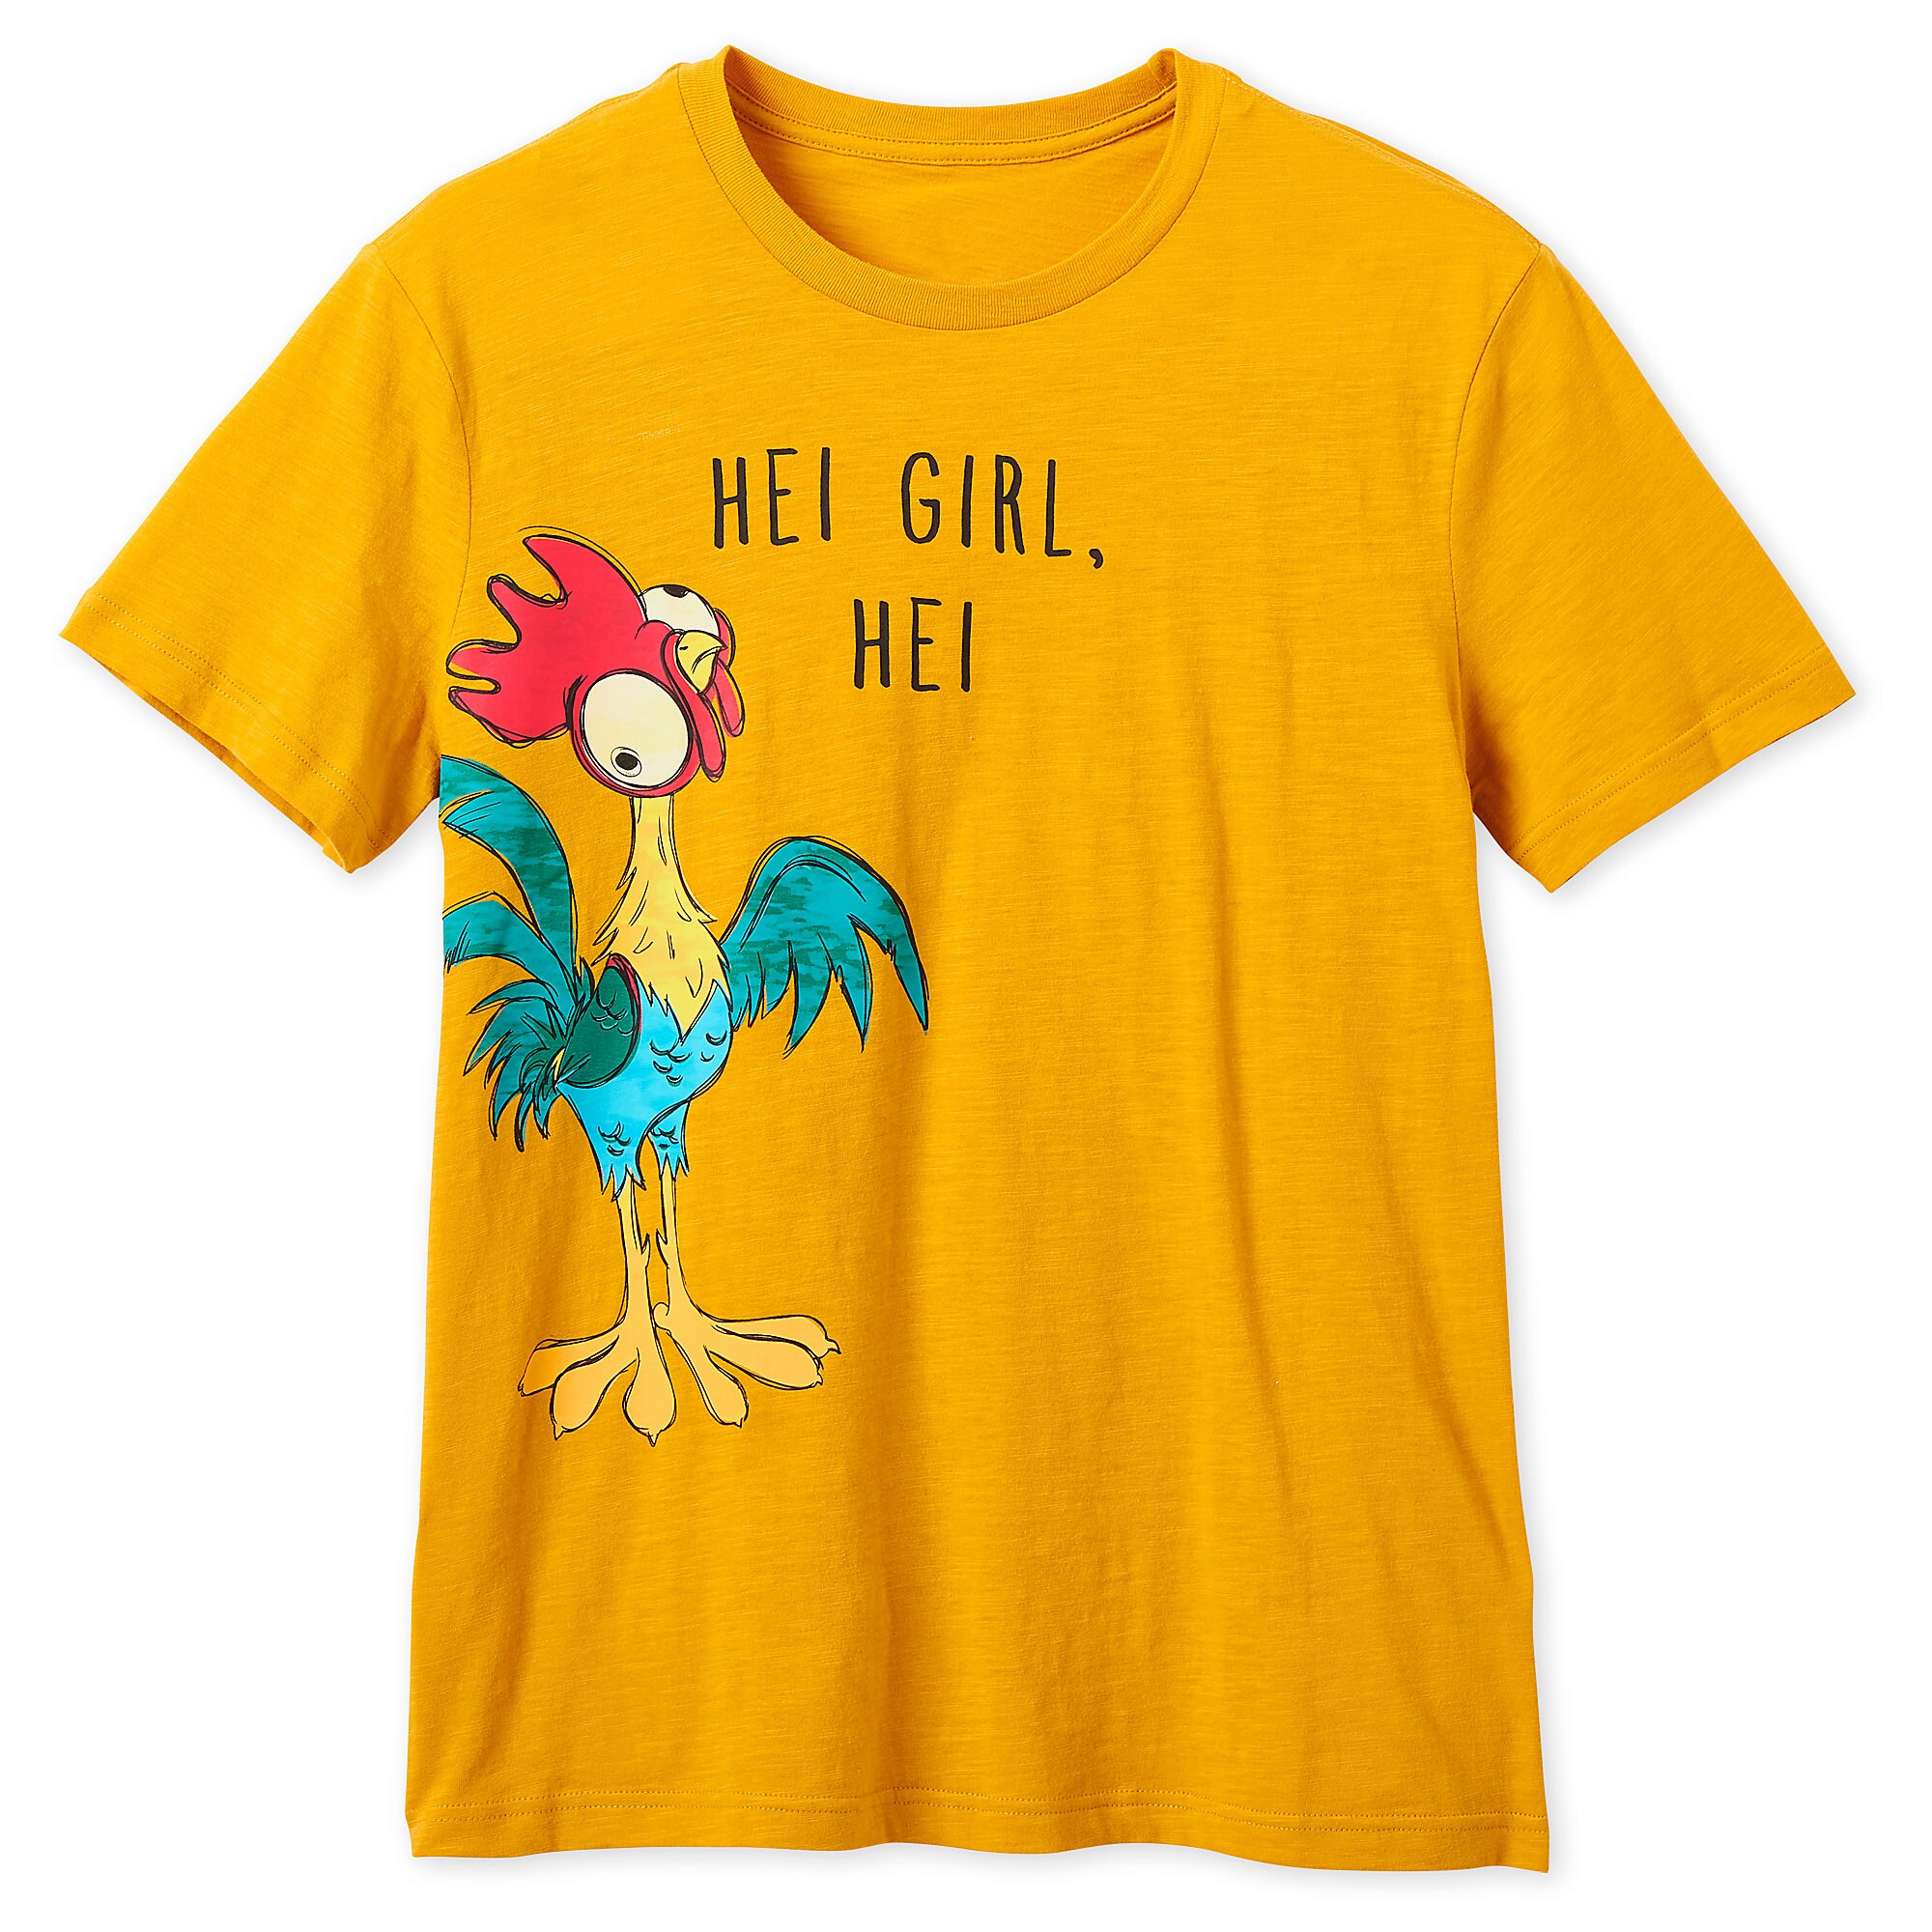 Hei Hei T-Shirt for Men - Disney Moana